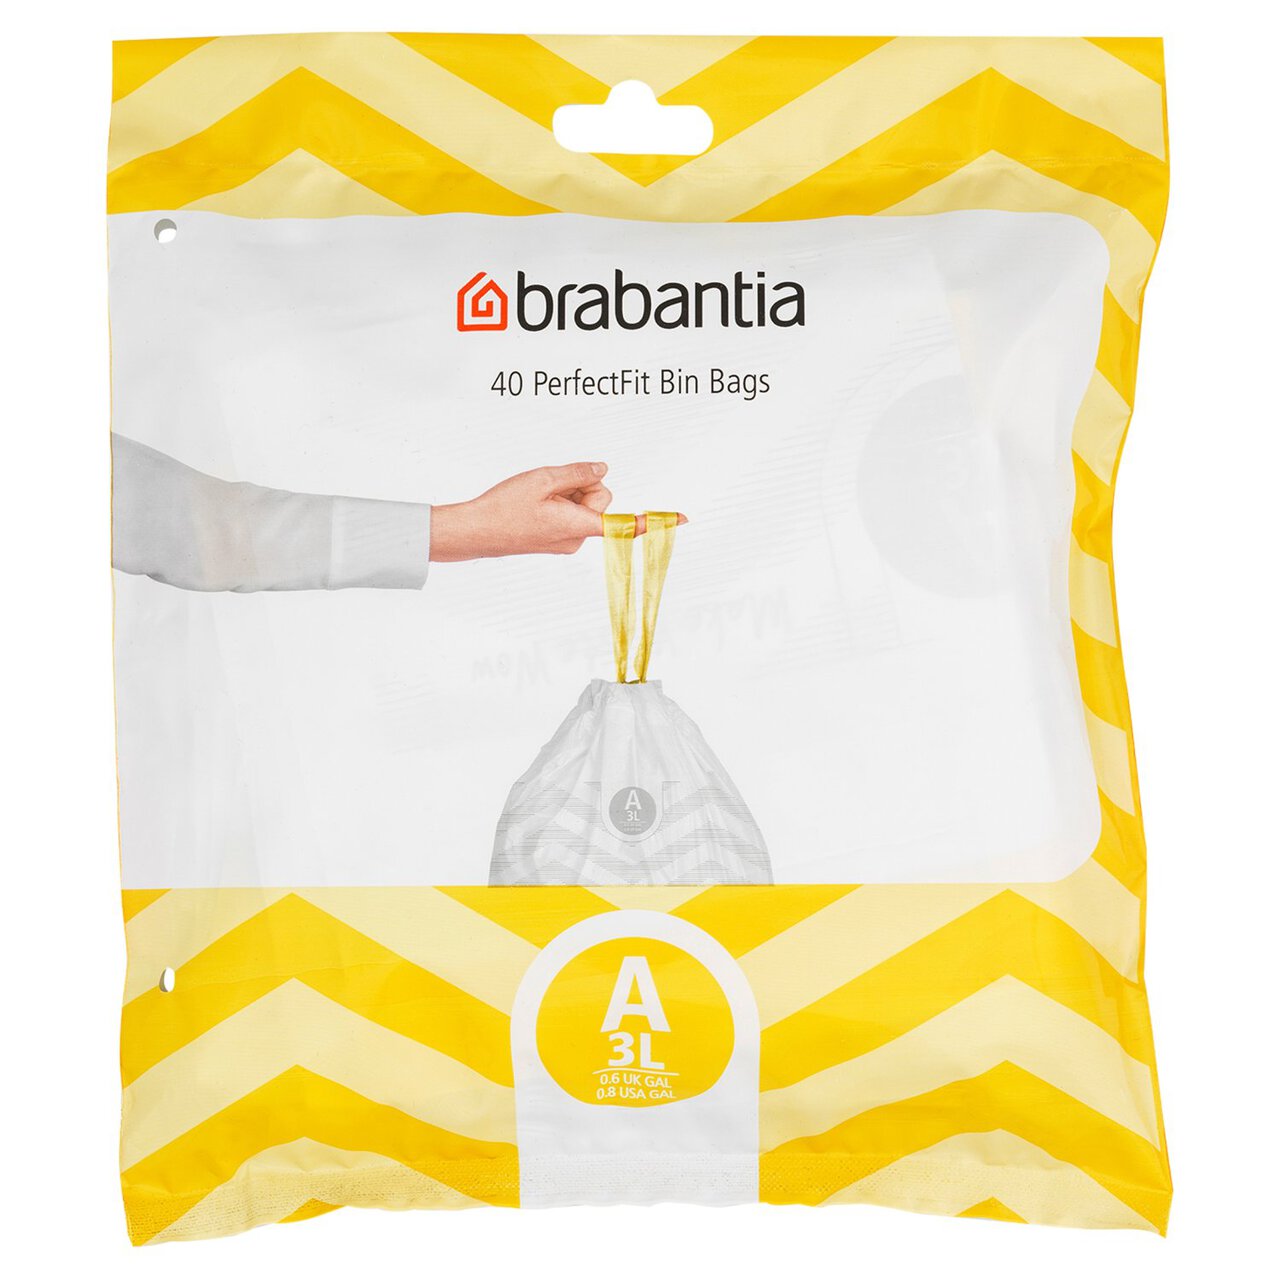 Brabantia A 3L Bin Liner Dispenser Pack 40 per pack